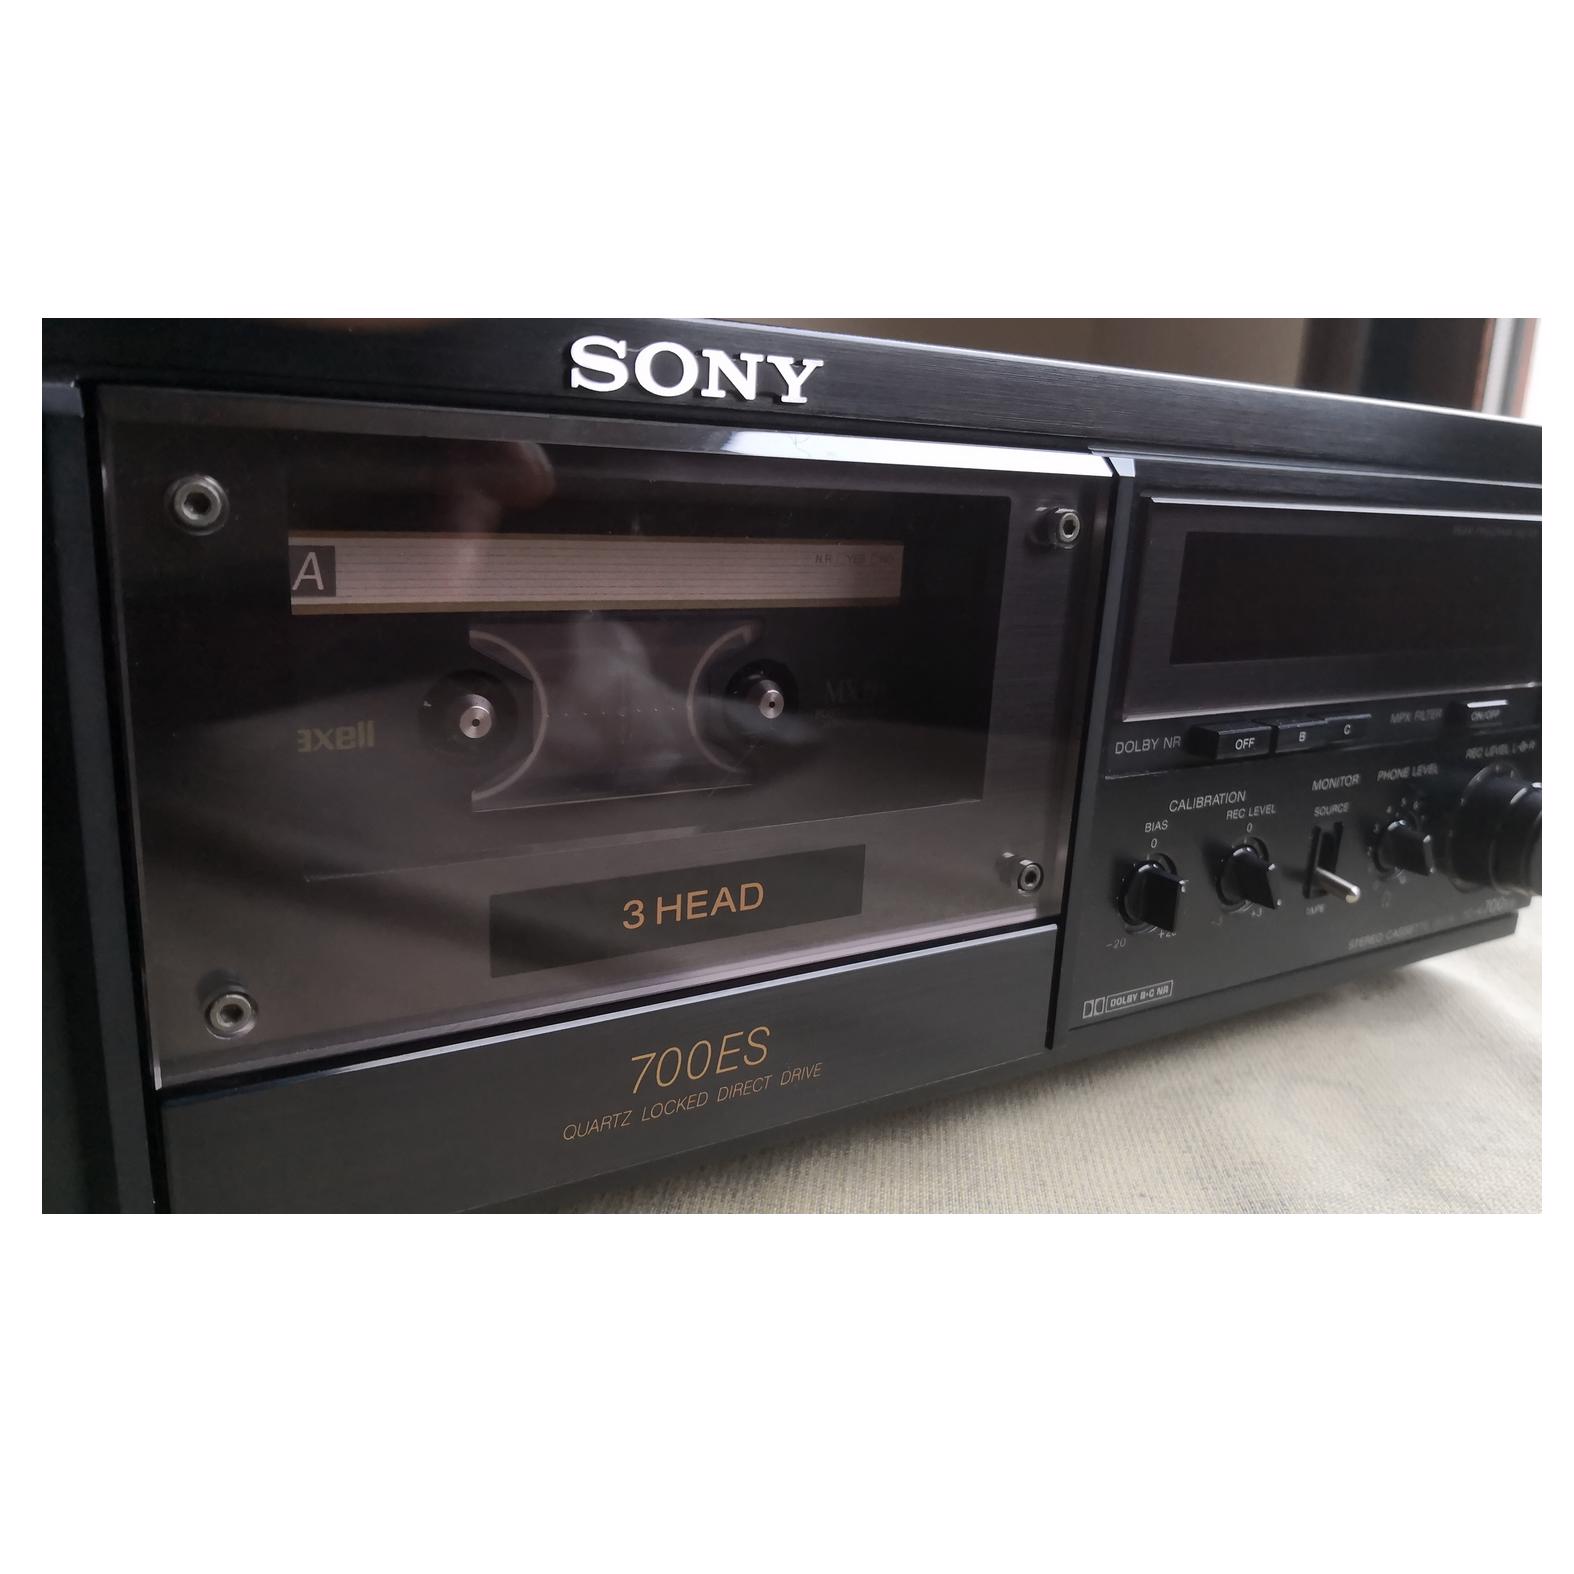 Sony tc-k700es kaset teyp - kusursuz durumda koleksiyonluk 